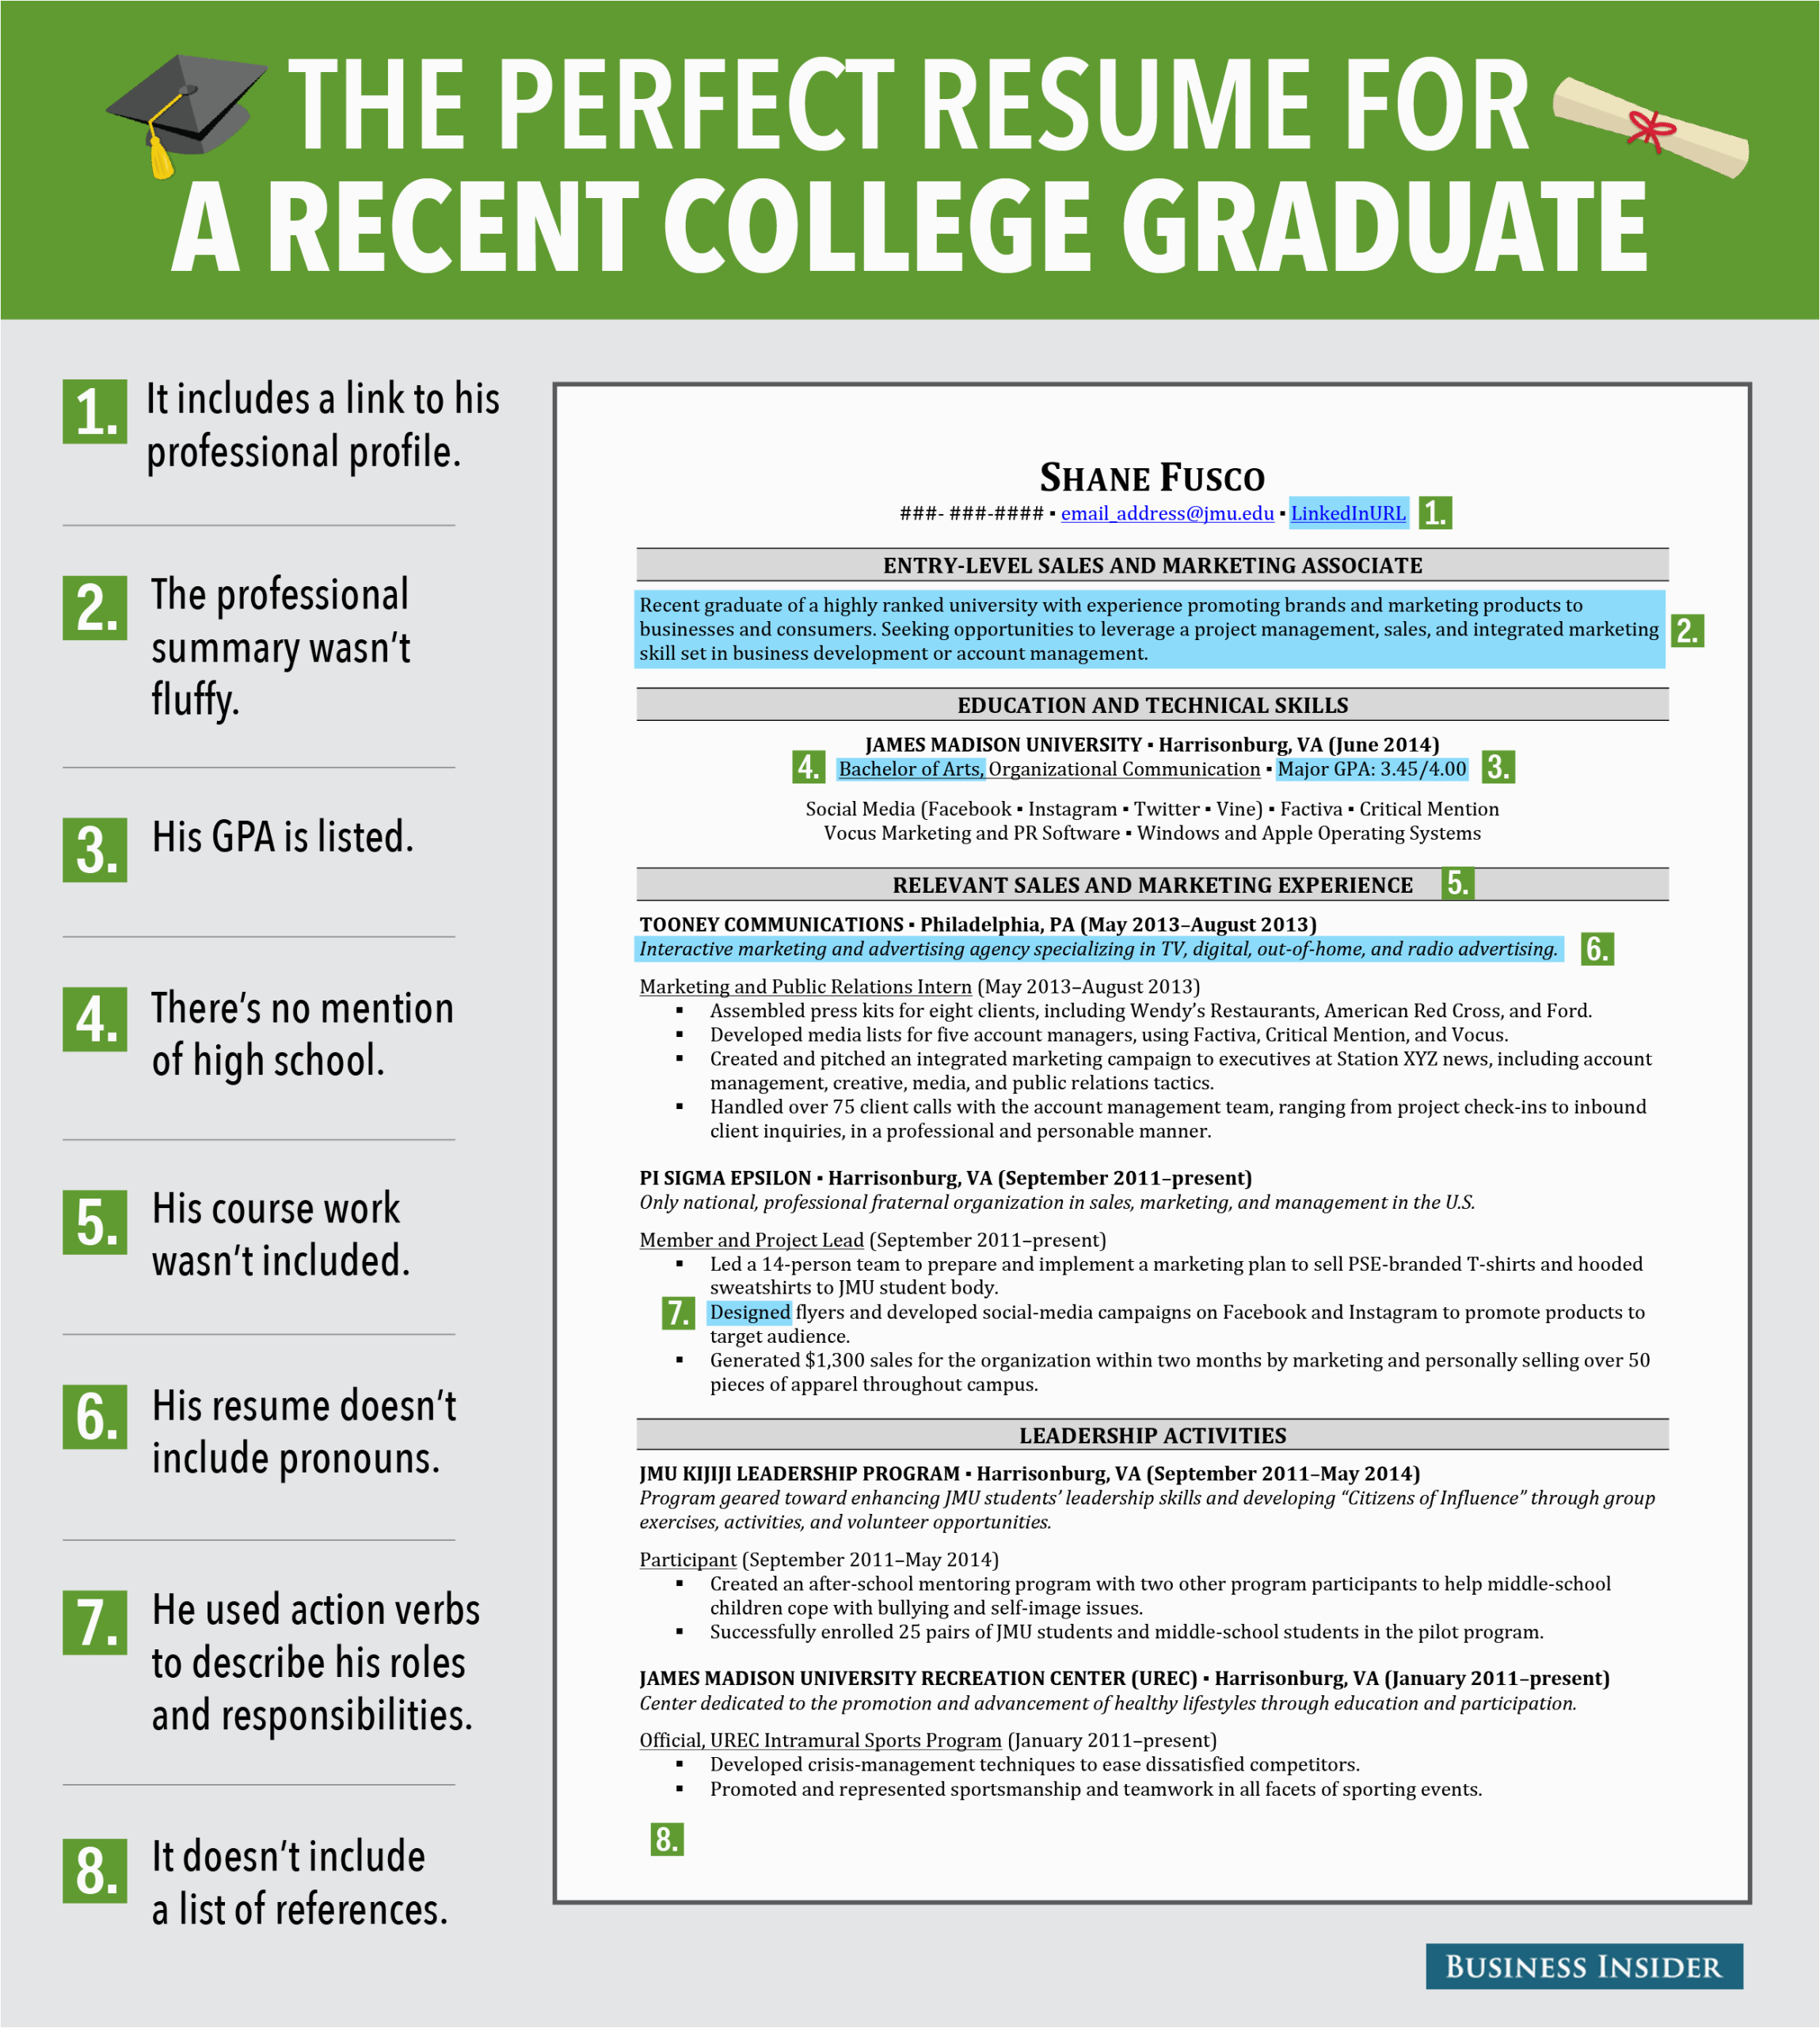 Resume Samples College Graduate Entry Level Excellent Resume for Recent Grad Business Insider